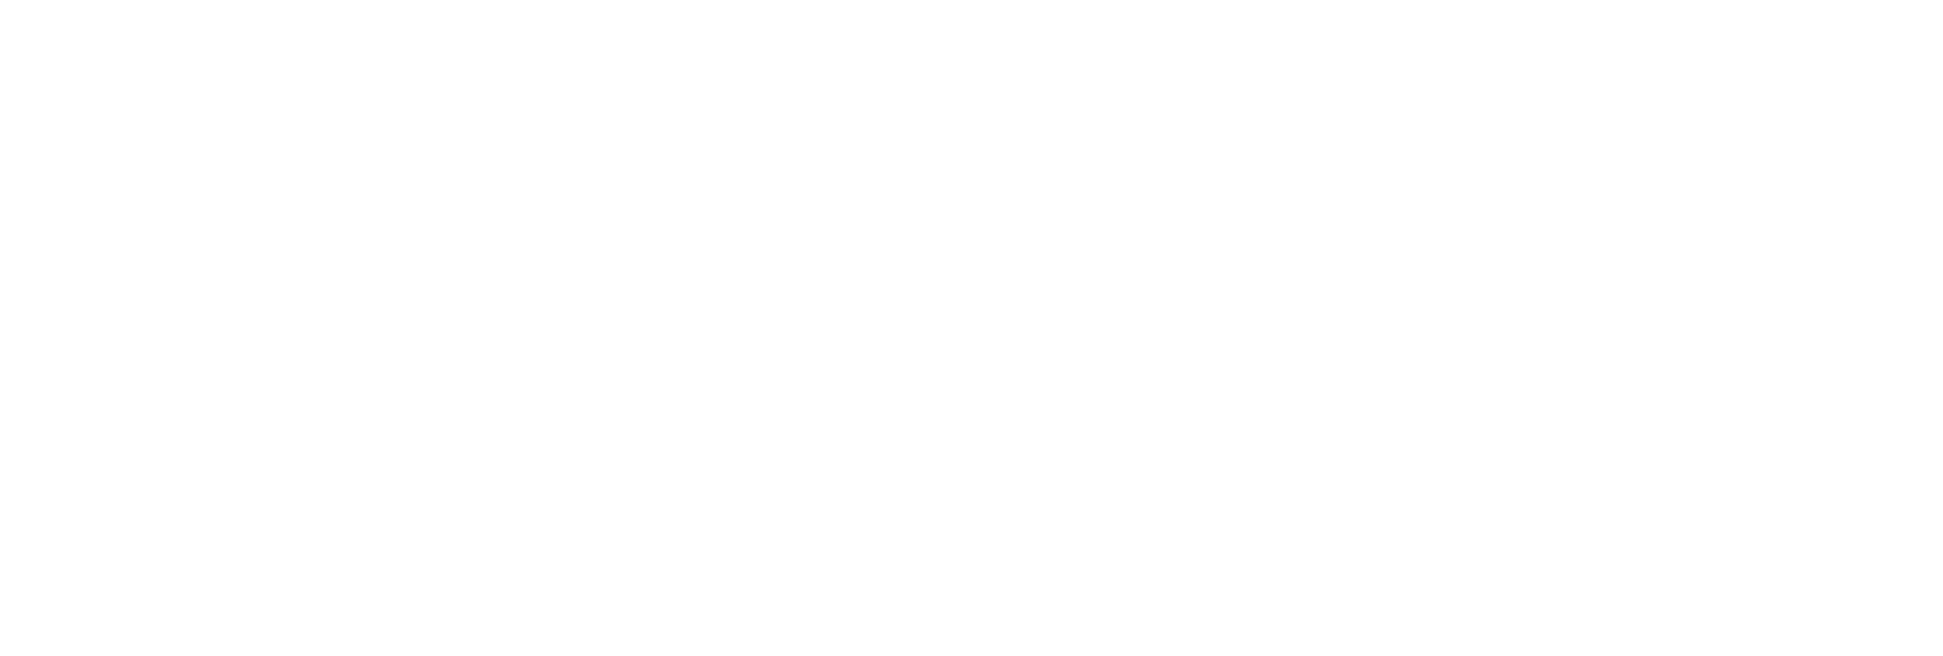 AniCura Dyreklinikk Drammen logo